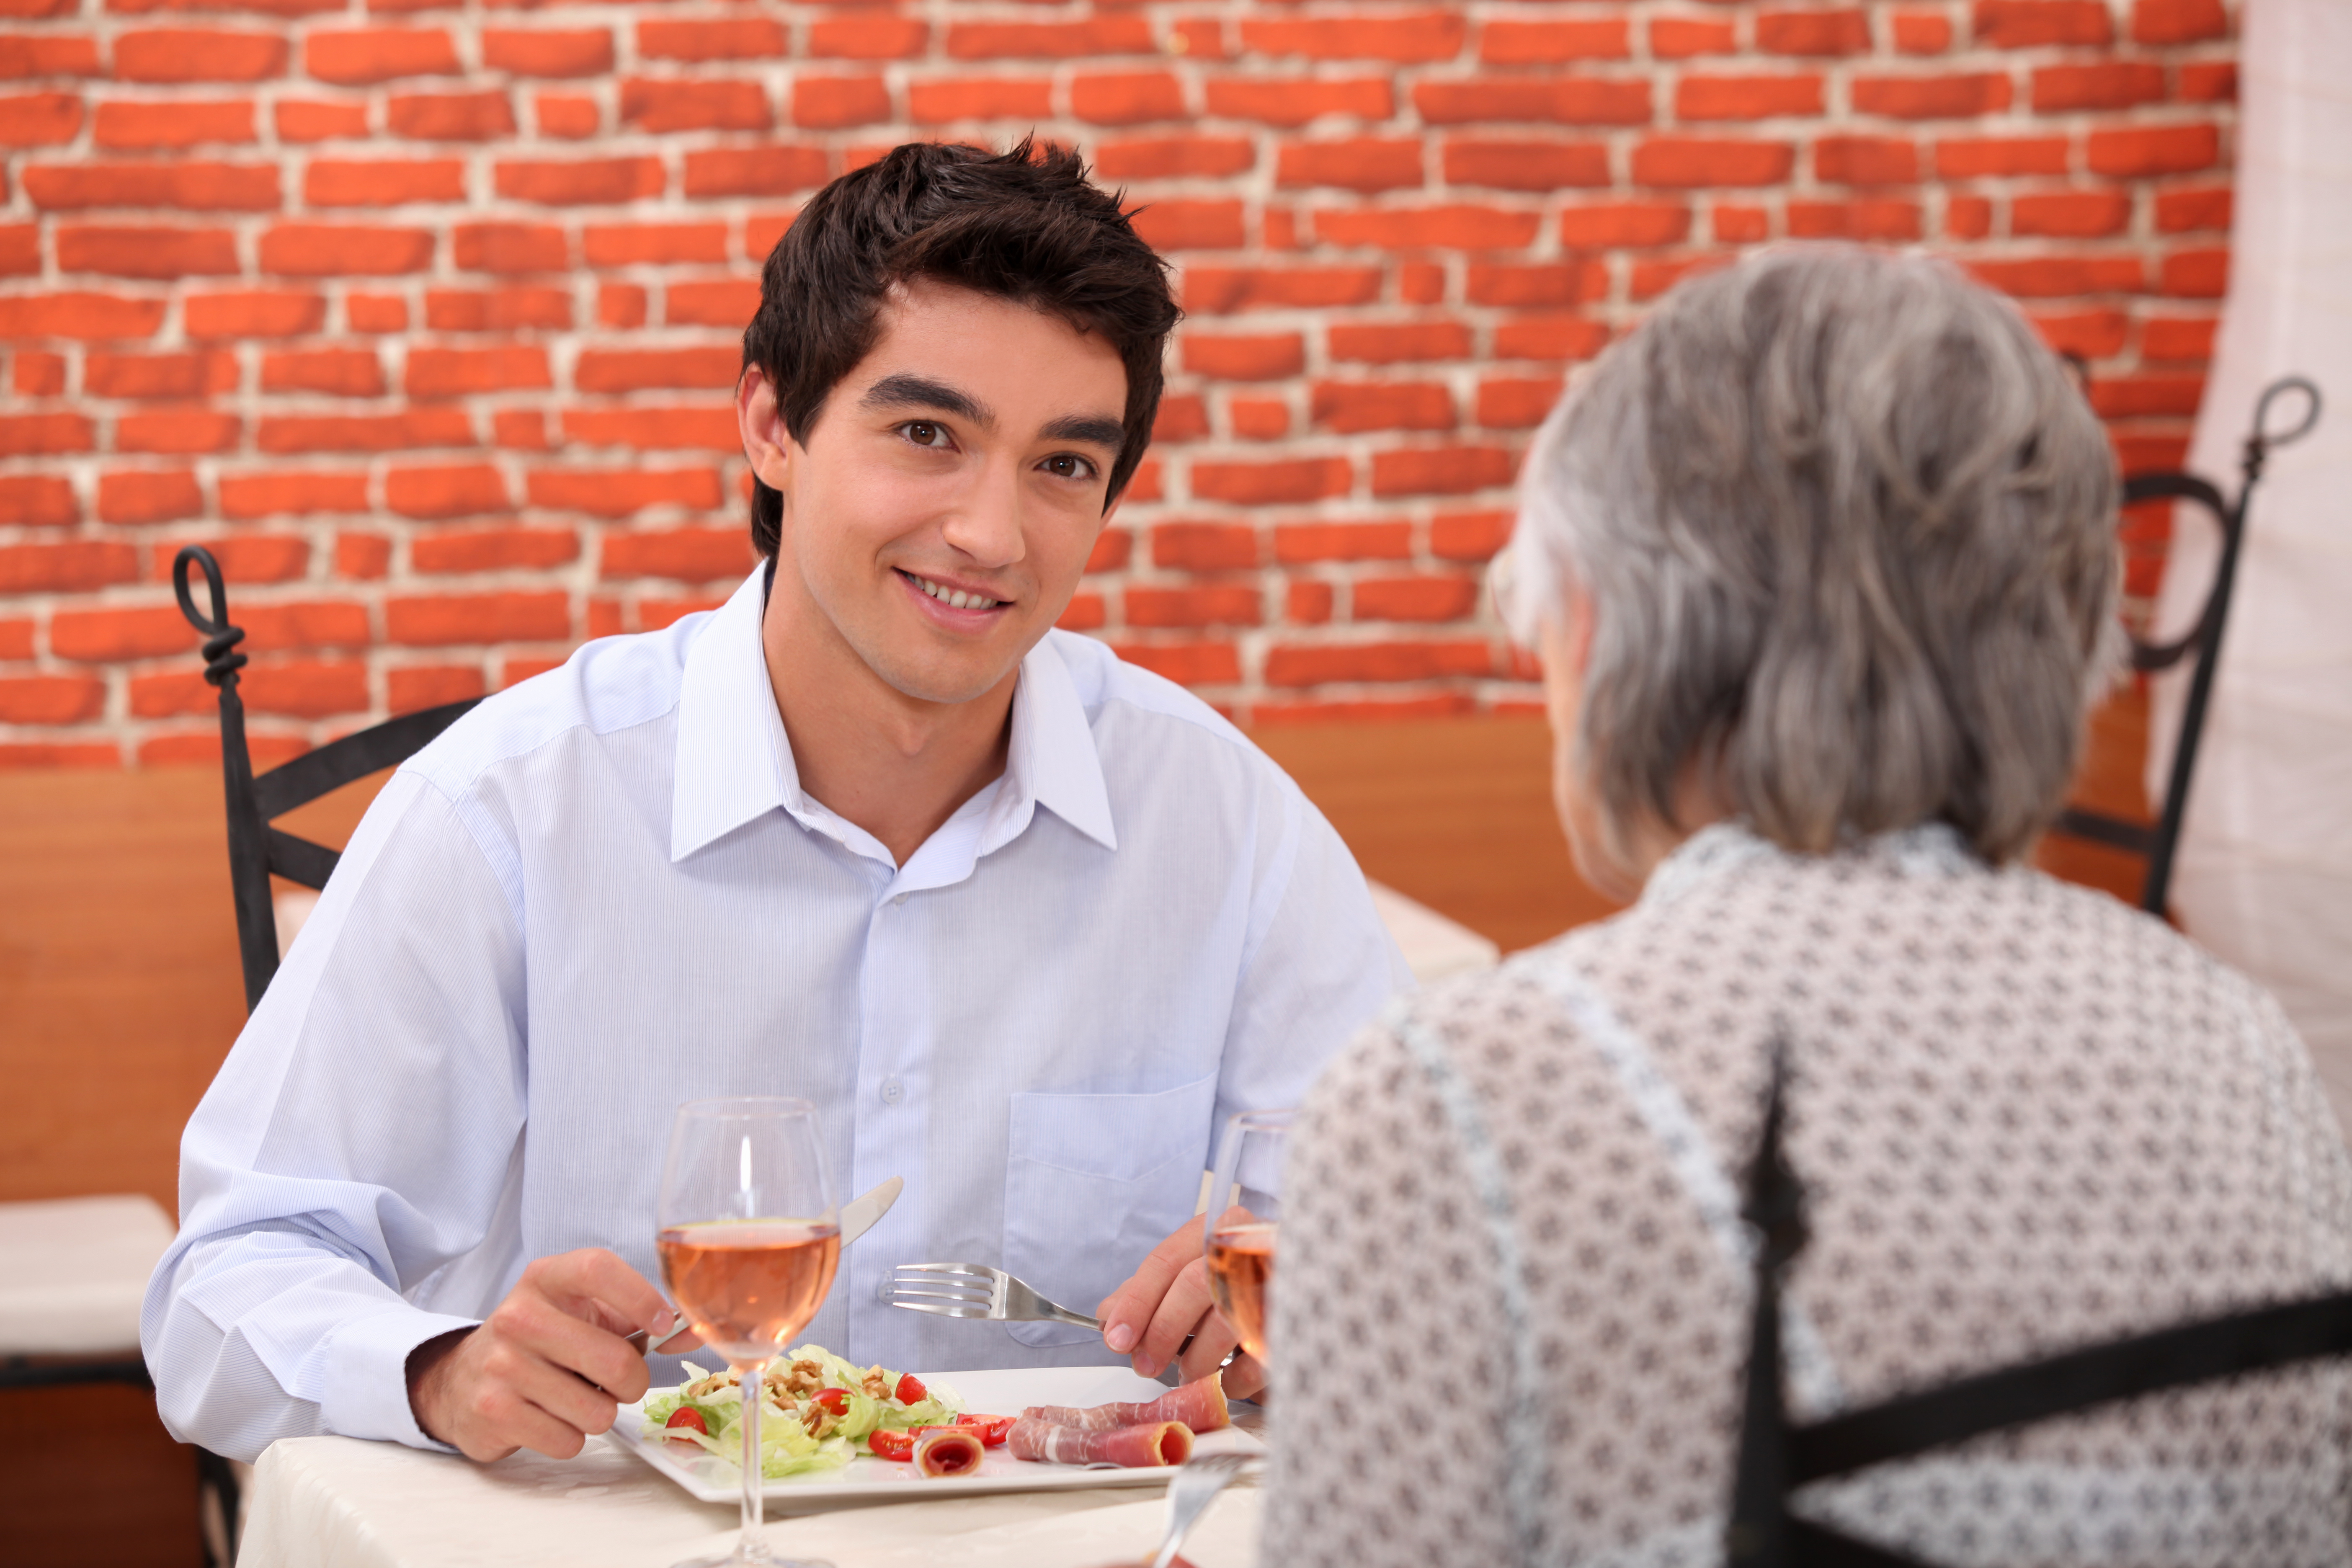 A man talking to an older woman | Source: Shutterstock